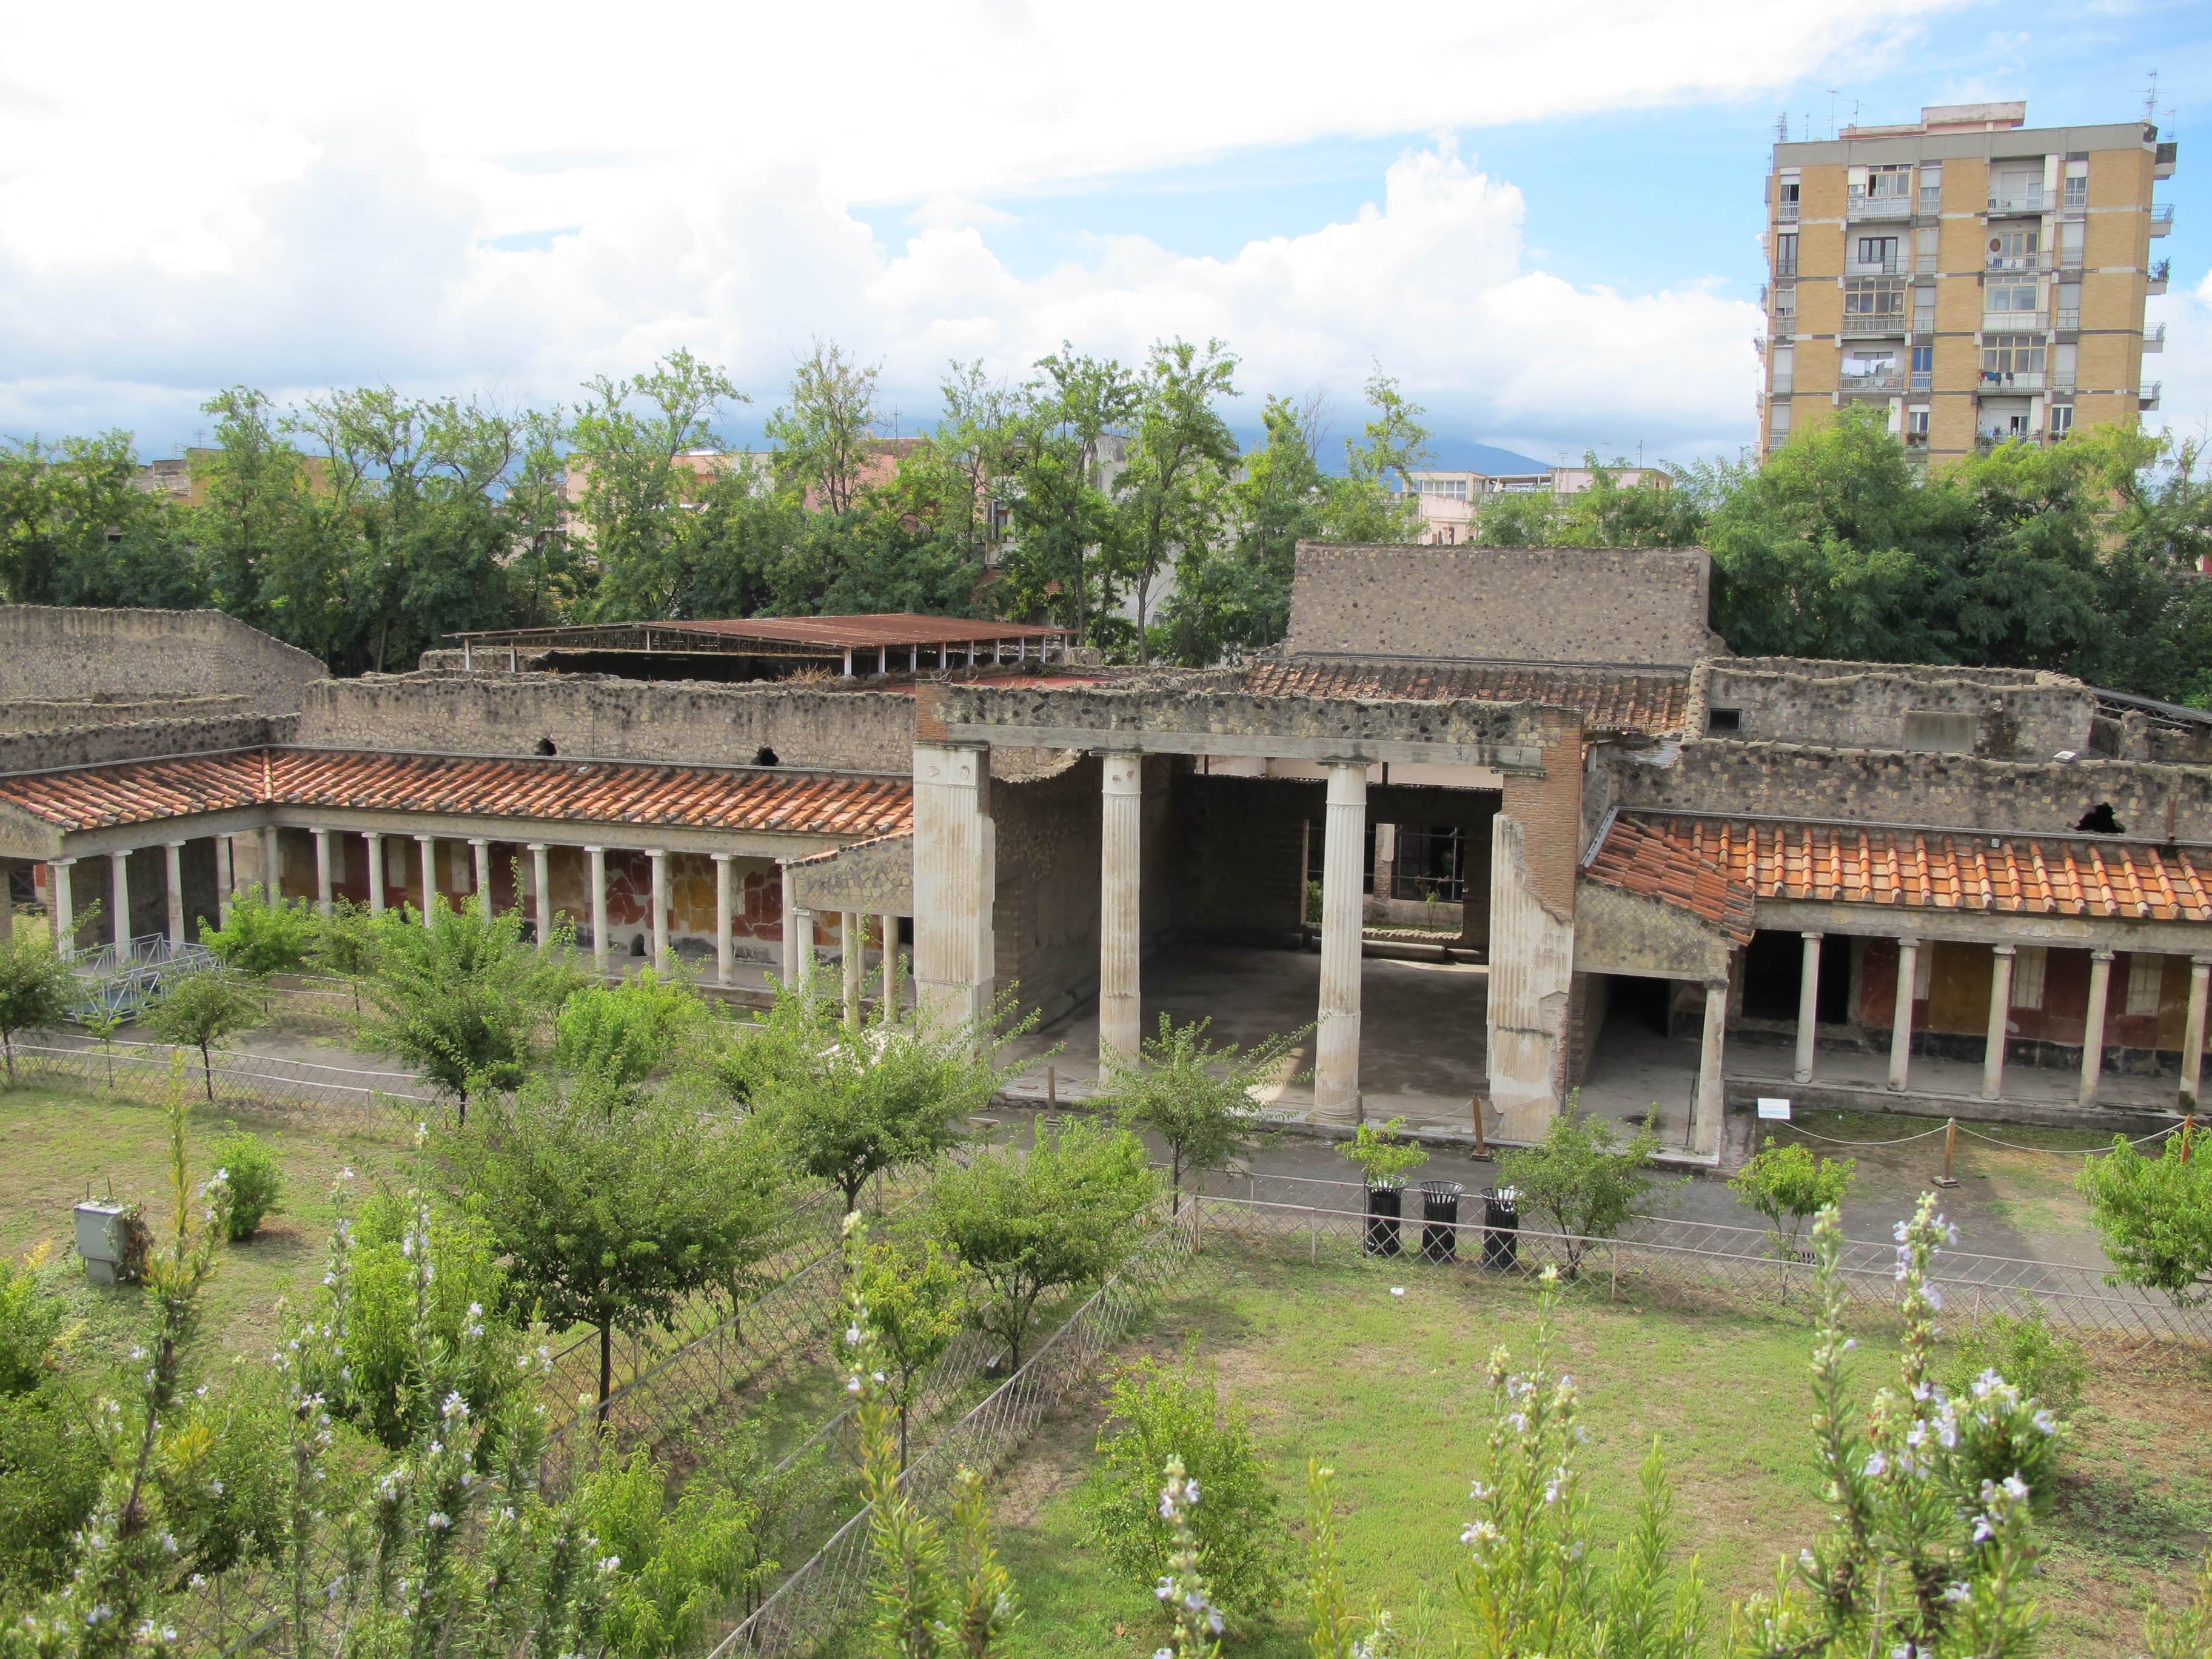 Roman domestic architecture (villa) (article) | Khan Academy